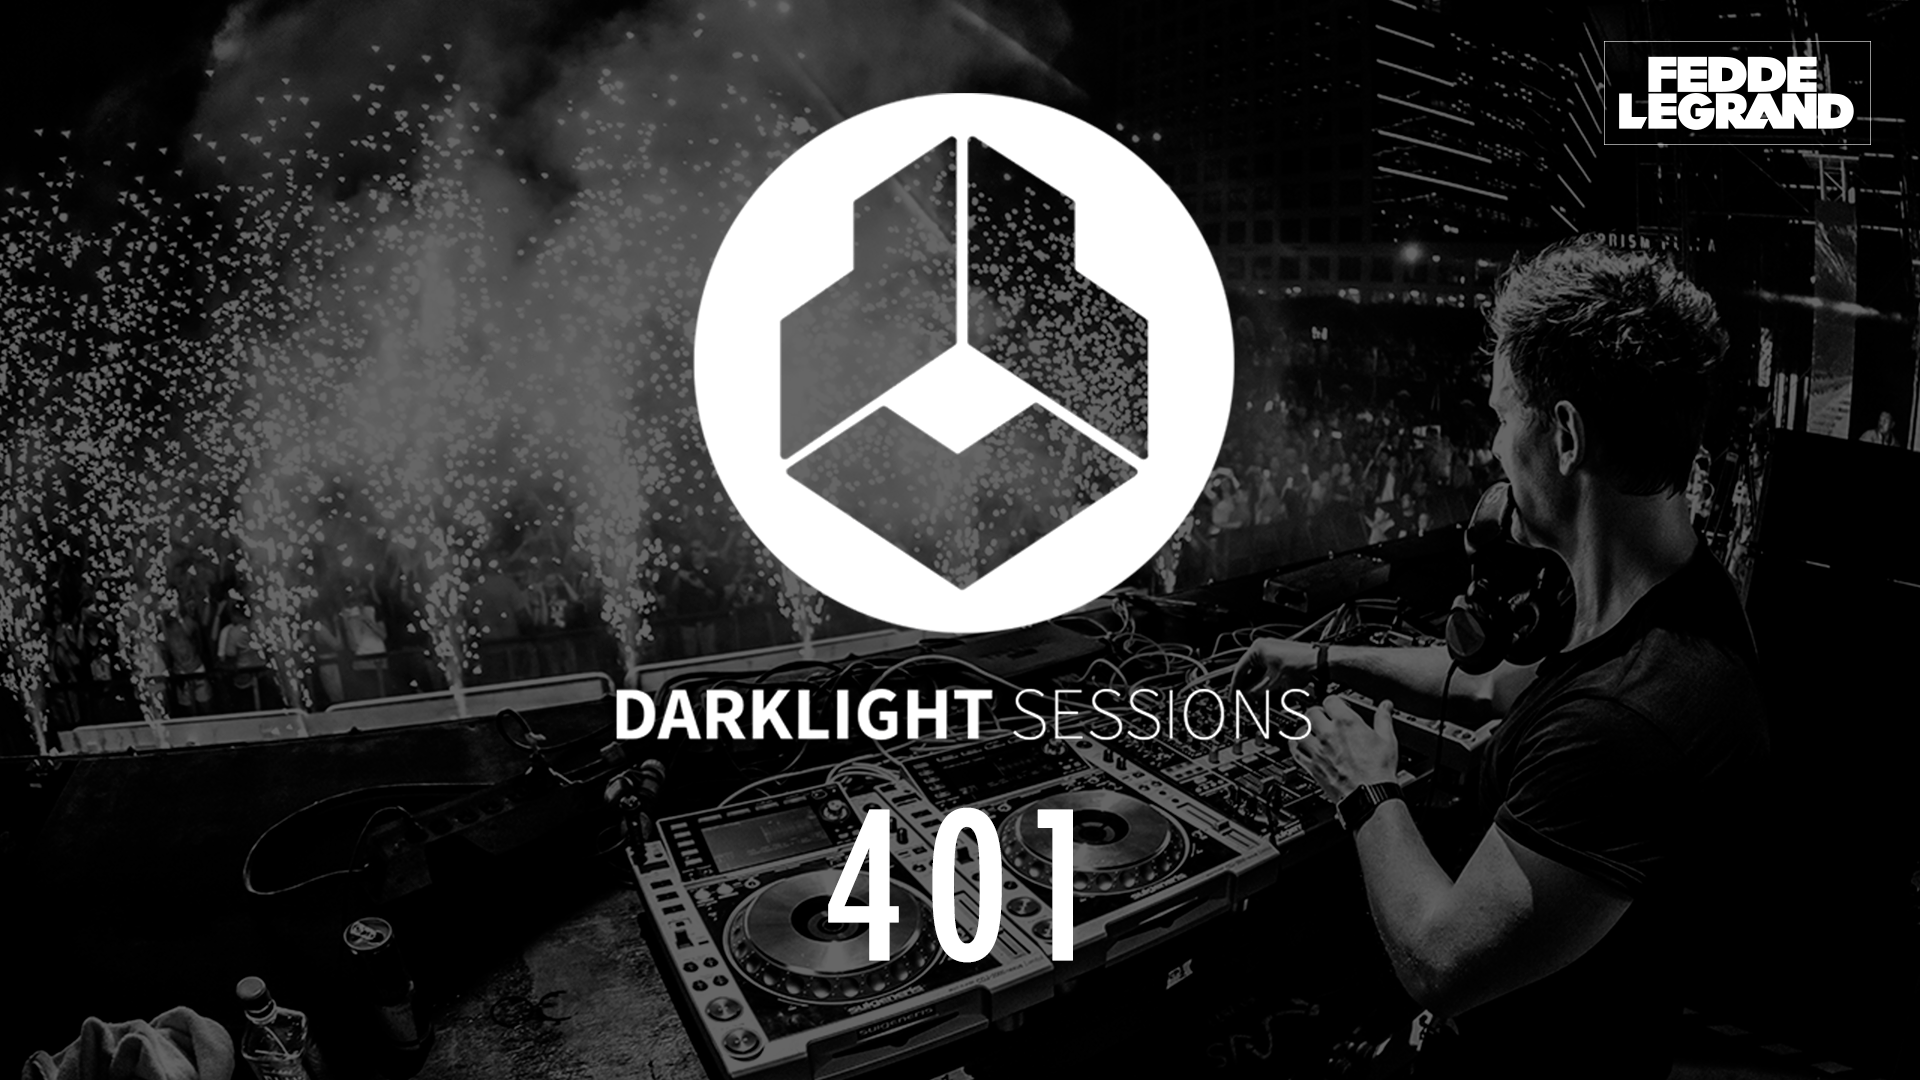 Darklight Sessions 401